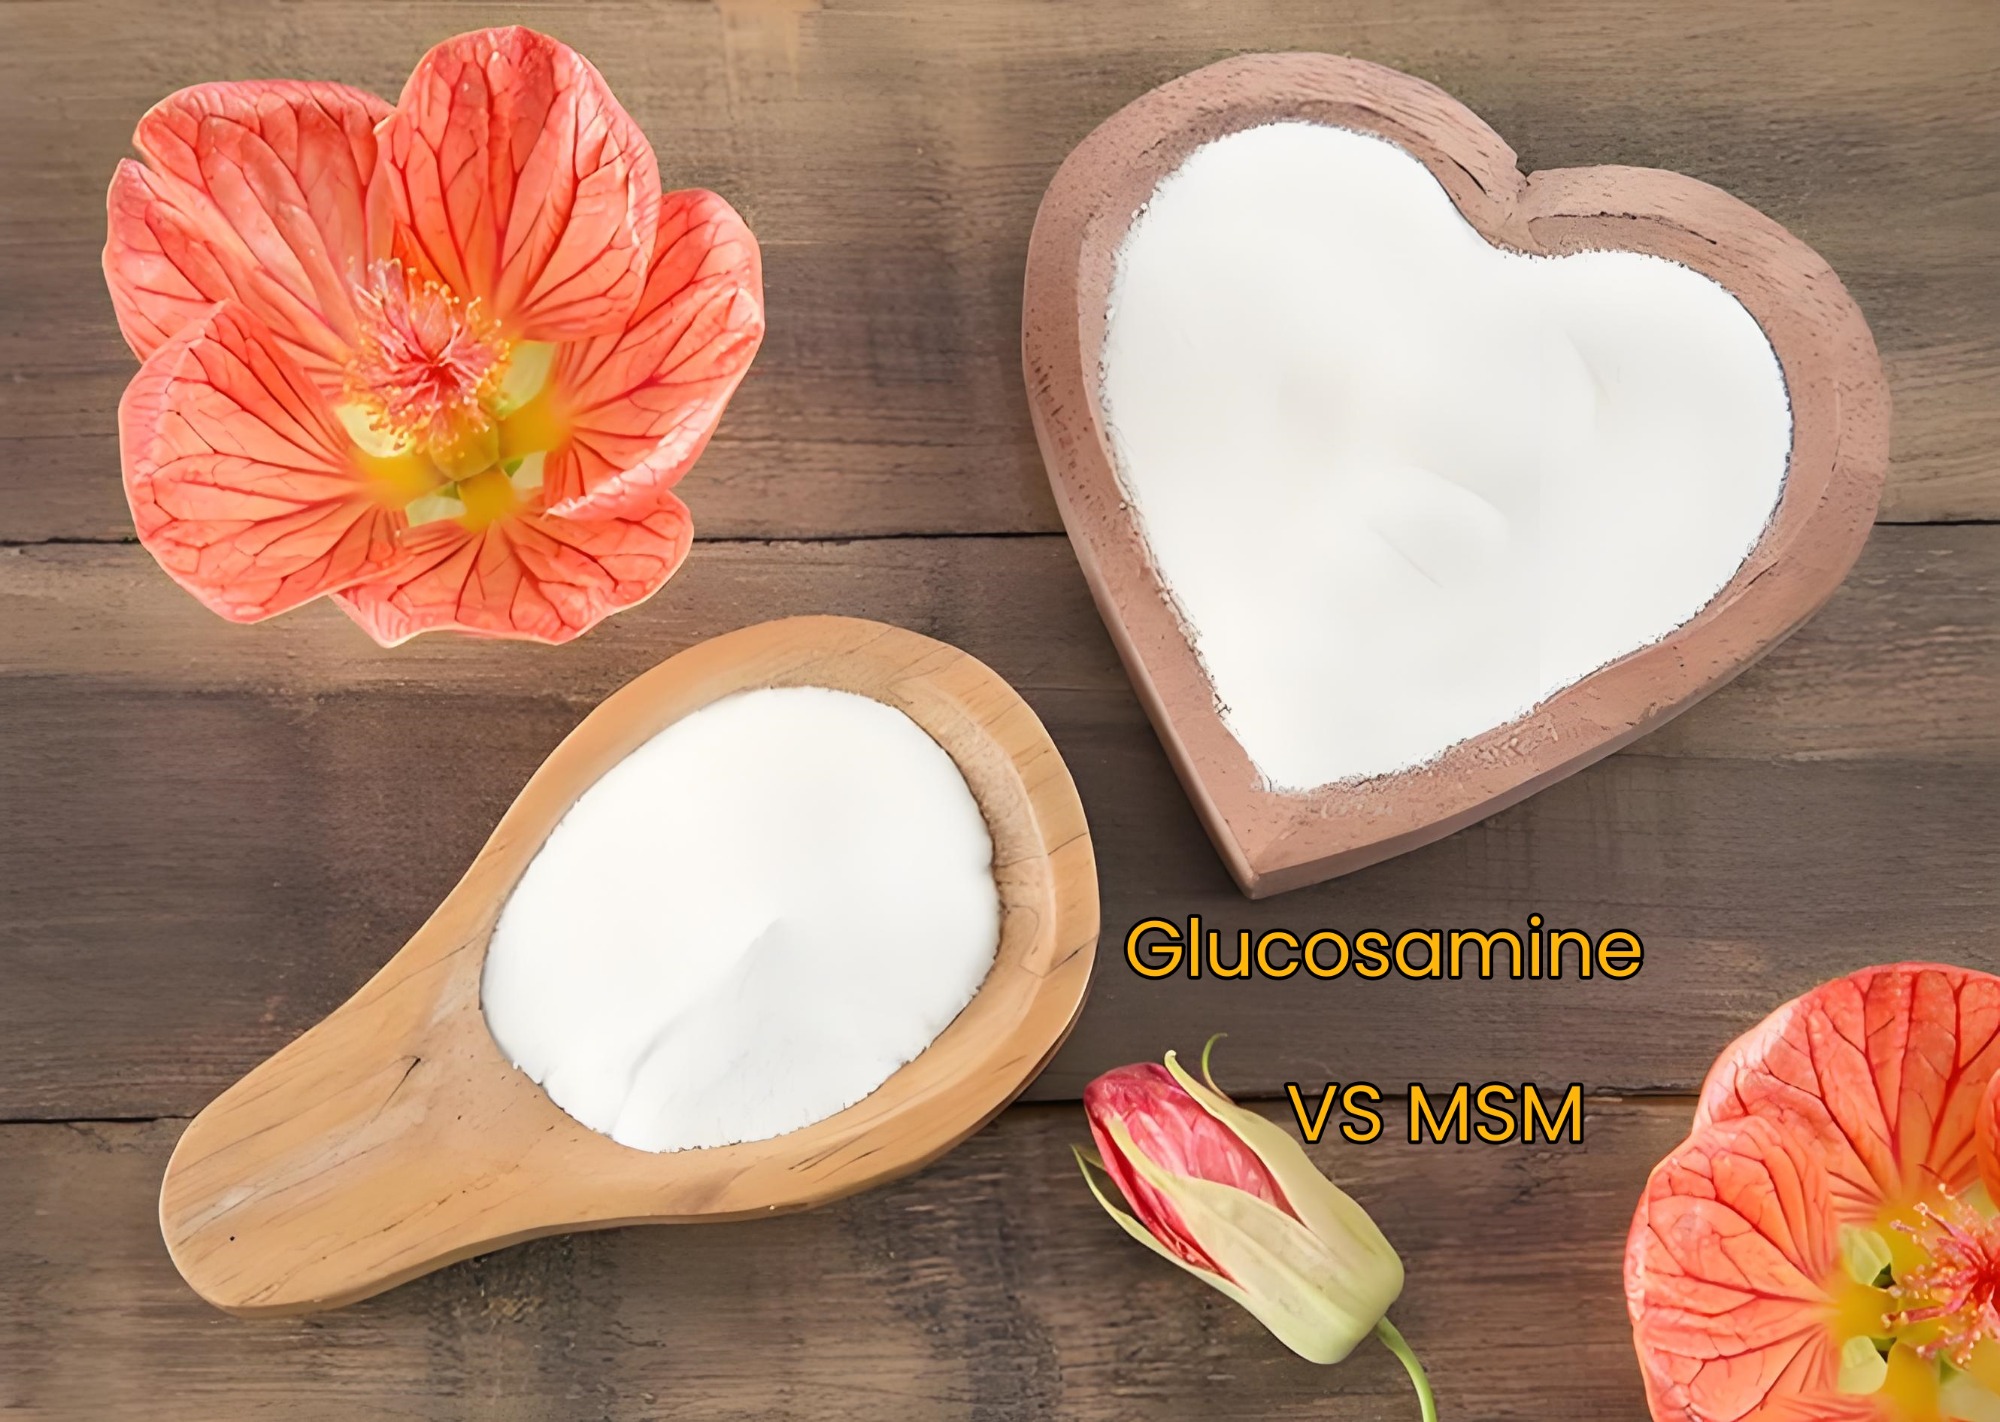 Glucosamine VS MSM 